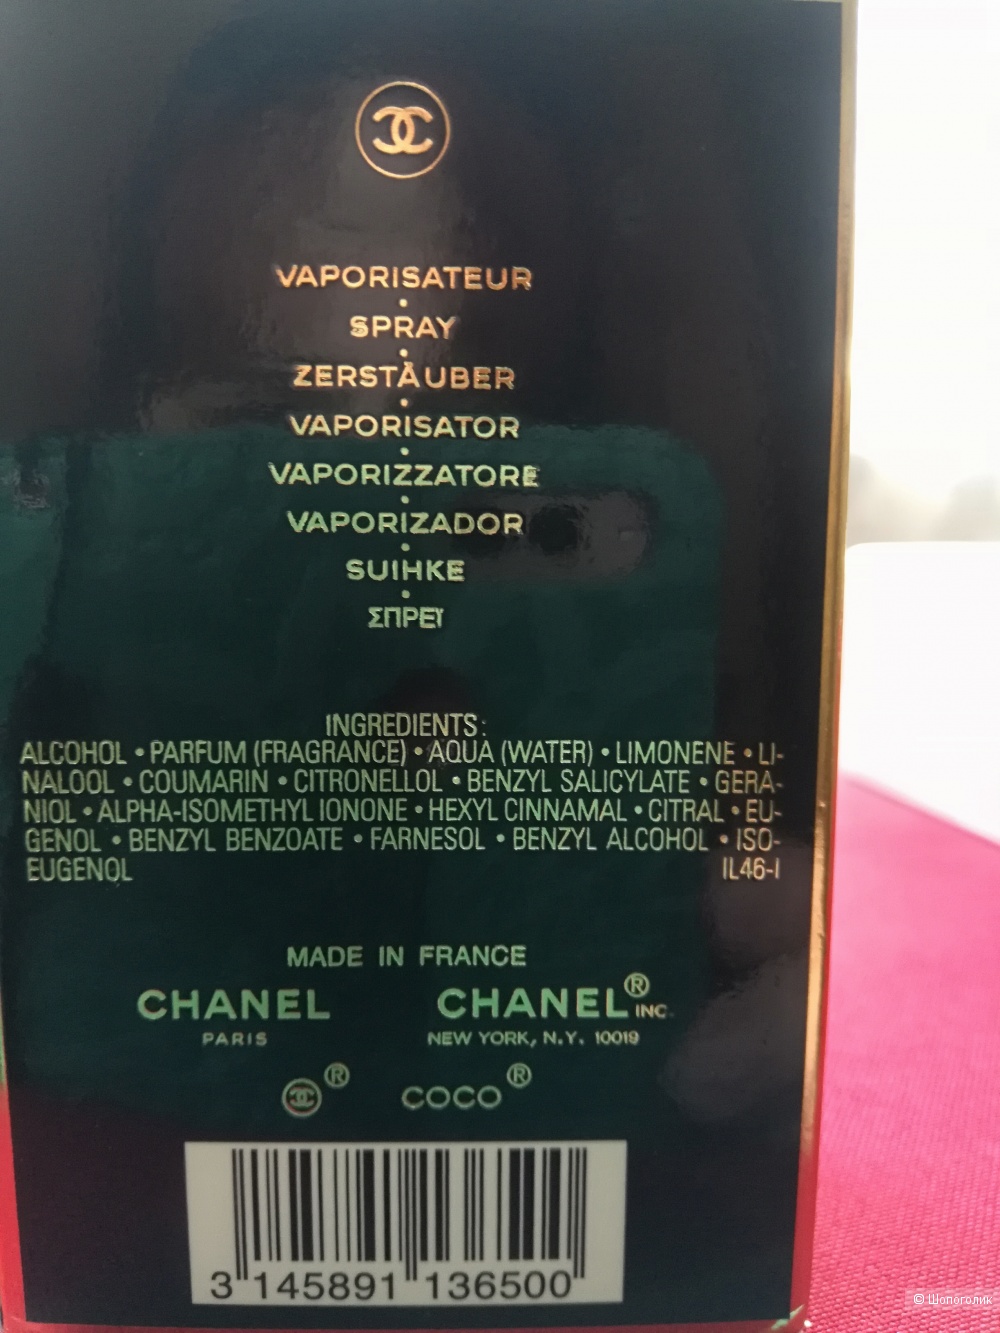 Парфюмерная вода Chanel Coco Noir, остаток 45 мл